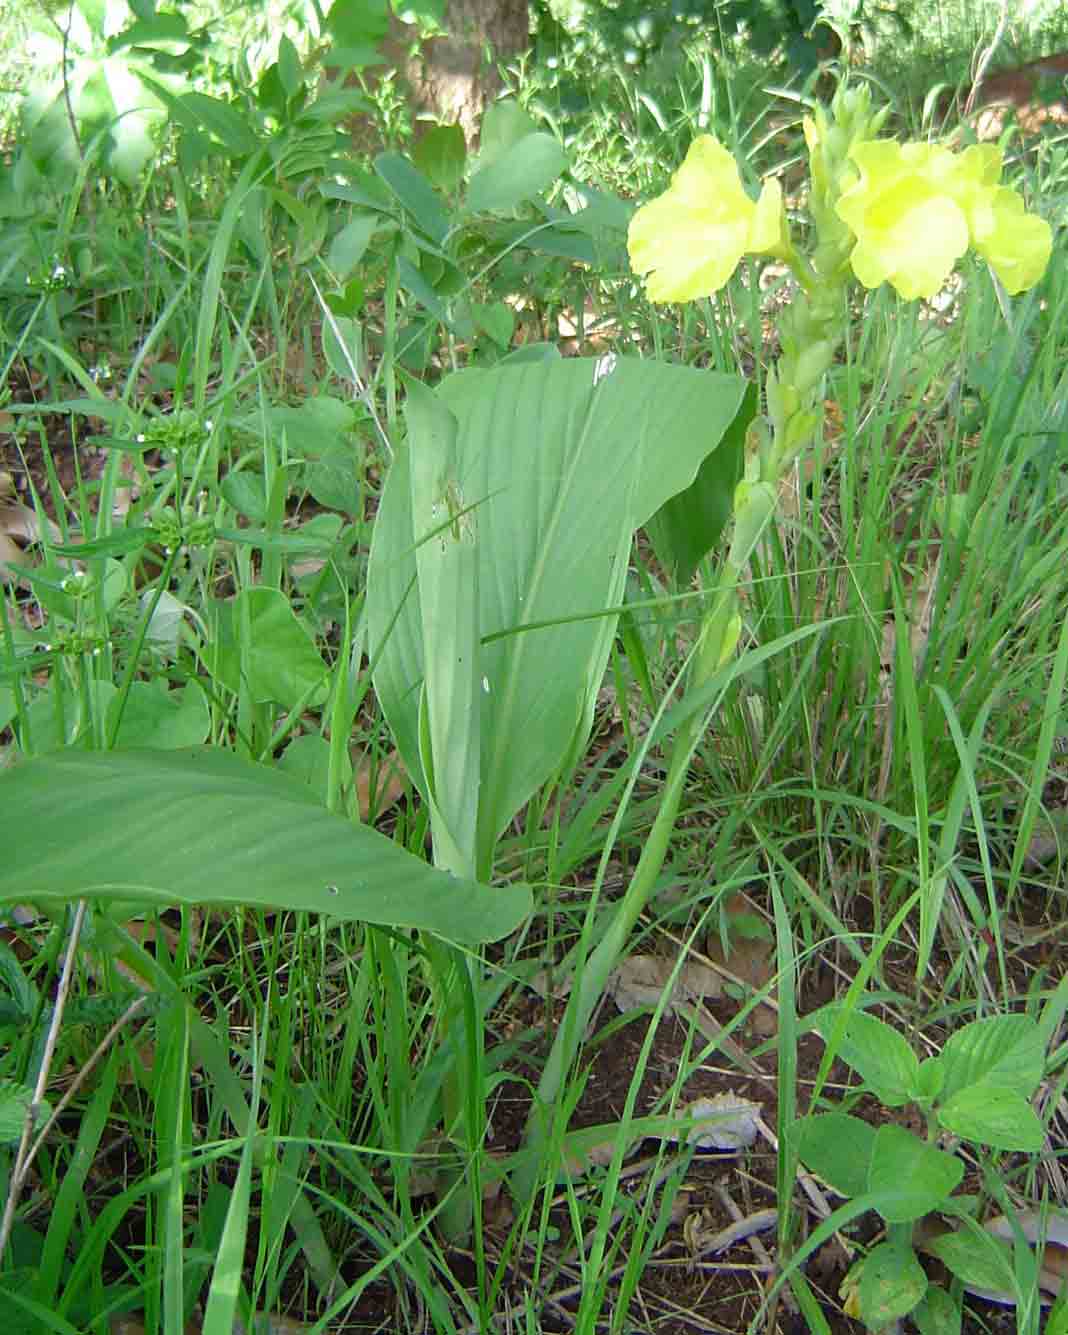 Siphonochilus kirkii - yellow-flowered form